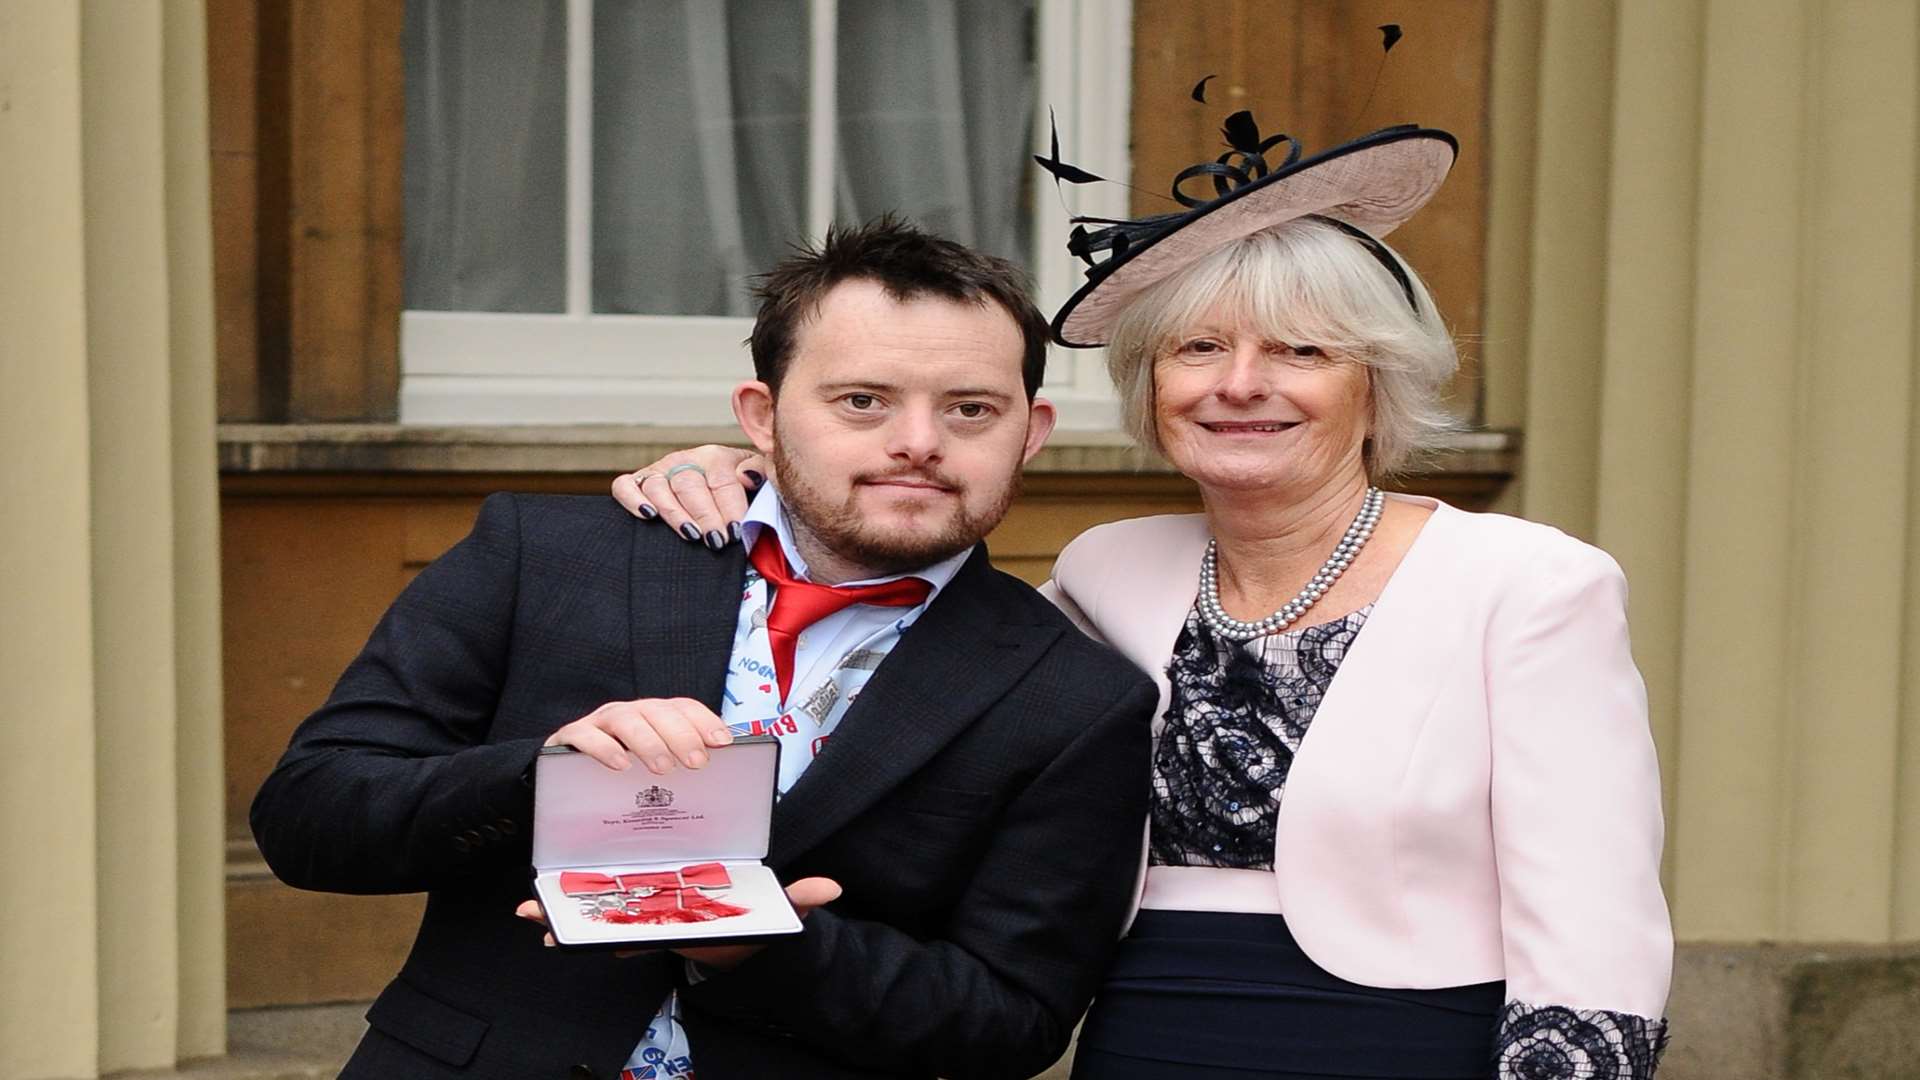 Sue Clarke MBE dedicated her award to son Jamie